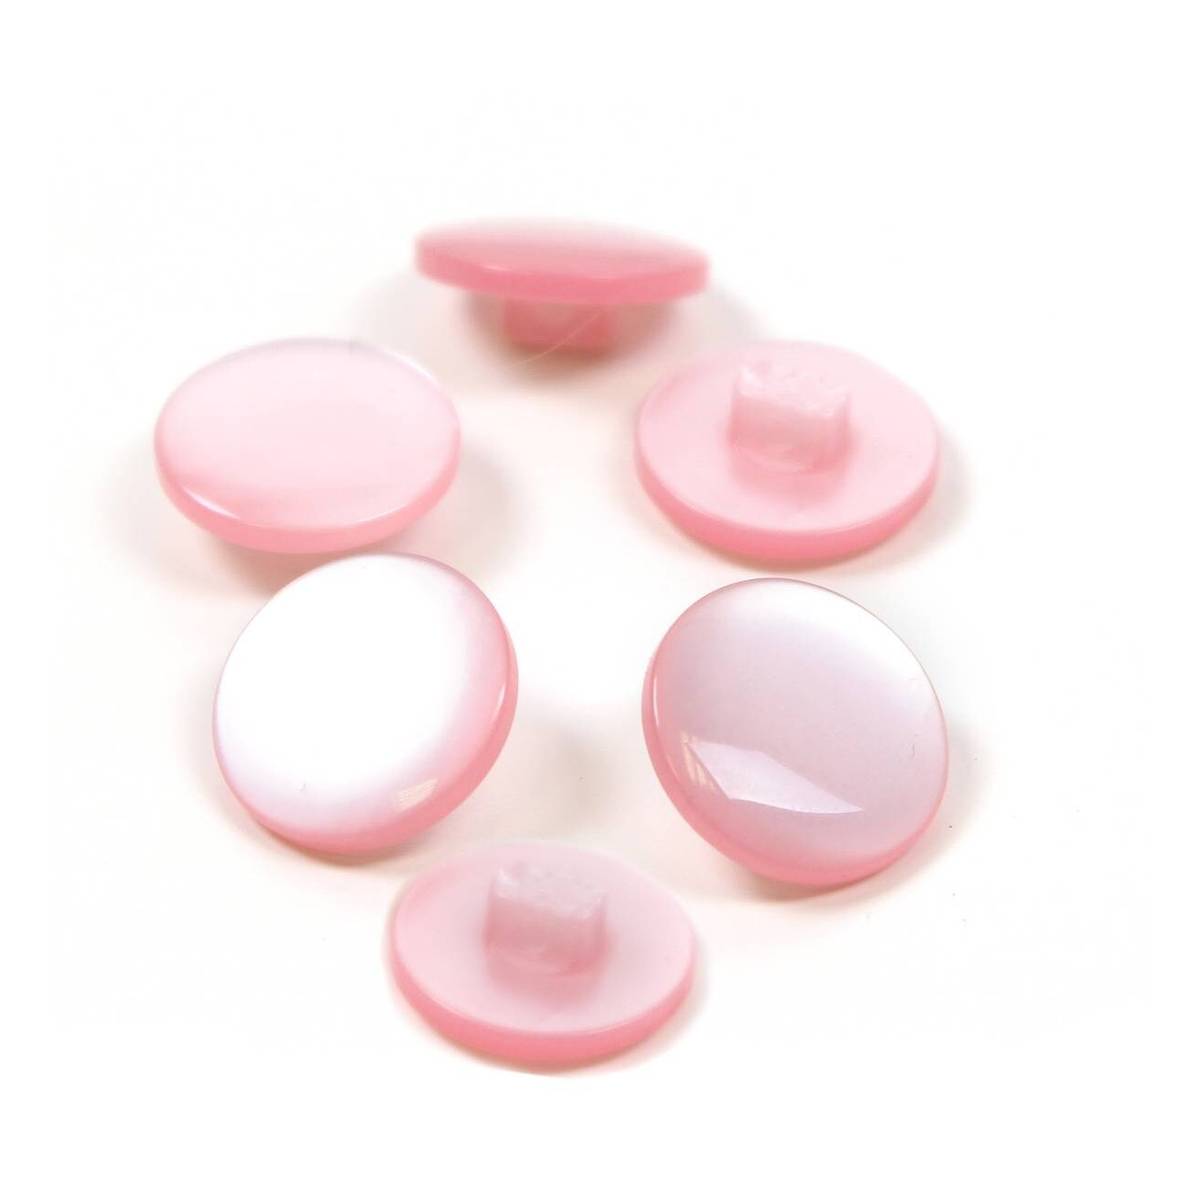 Buy Hemline Pink Basic Knitwear Button 6 Pack for GBP 3.00 | Hobbycraft UK